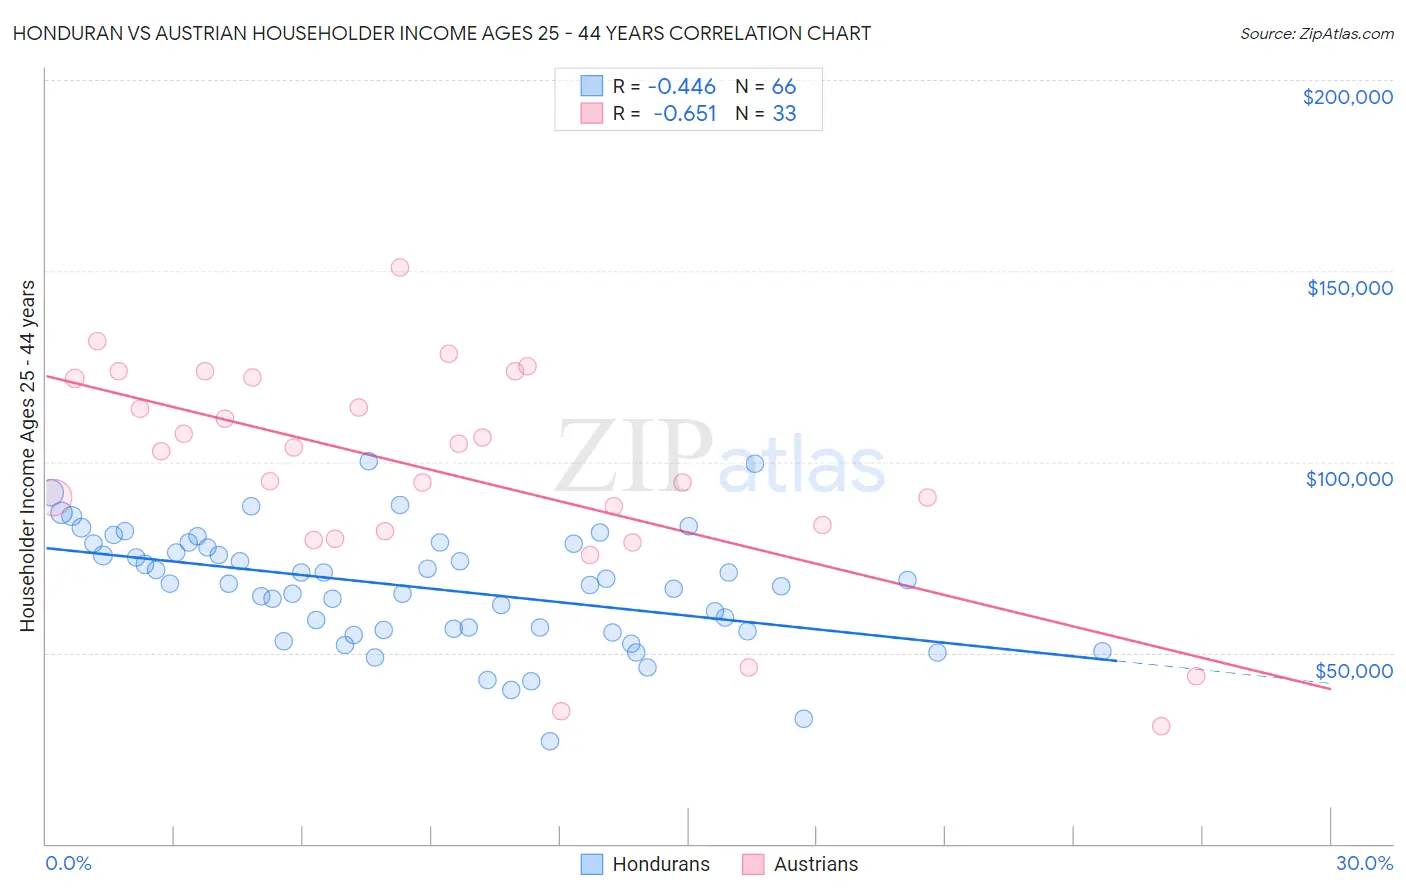 Honduran vs Austrian Householder Income Ages 25 - 44 years